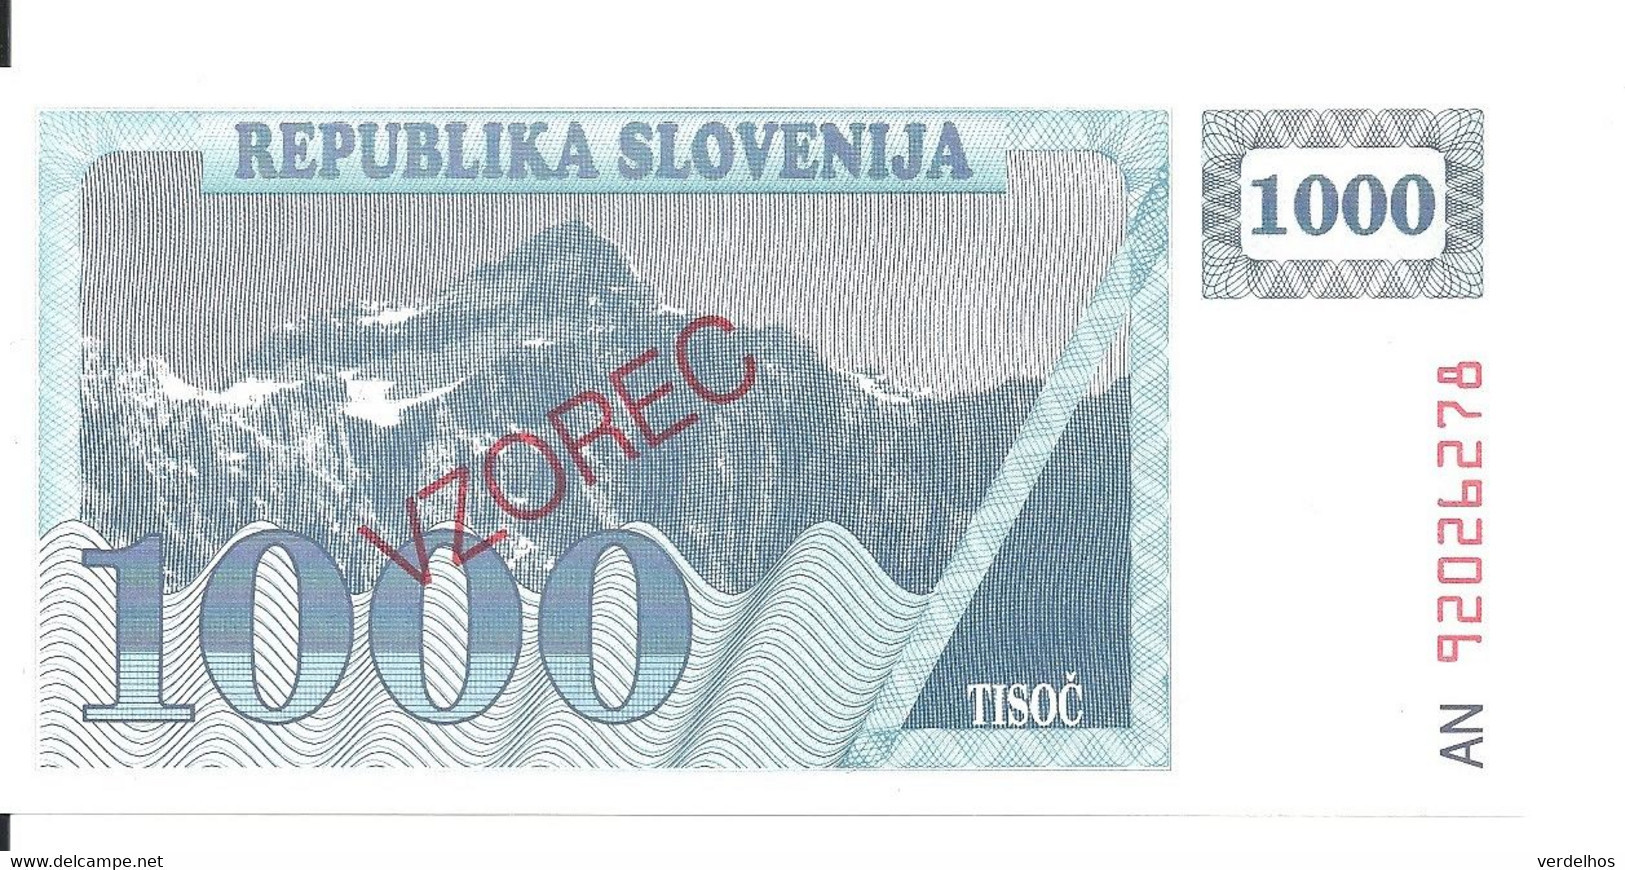 SLOVENIE 1000 TOLARJEV 1992 UNC P 9s1 - Slovénie